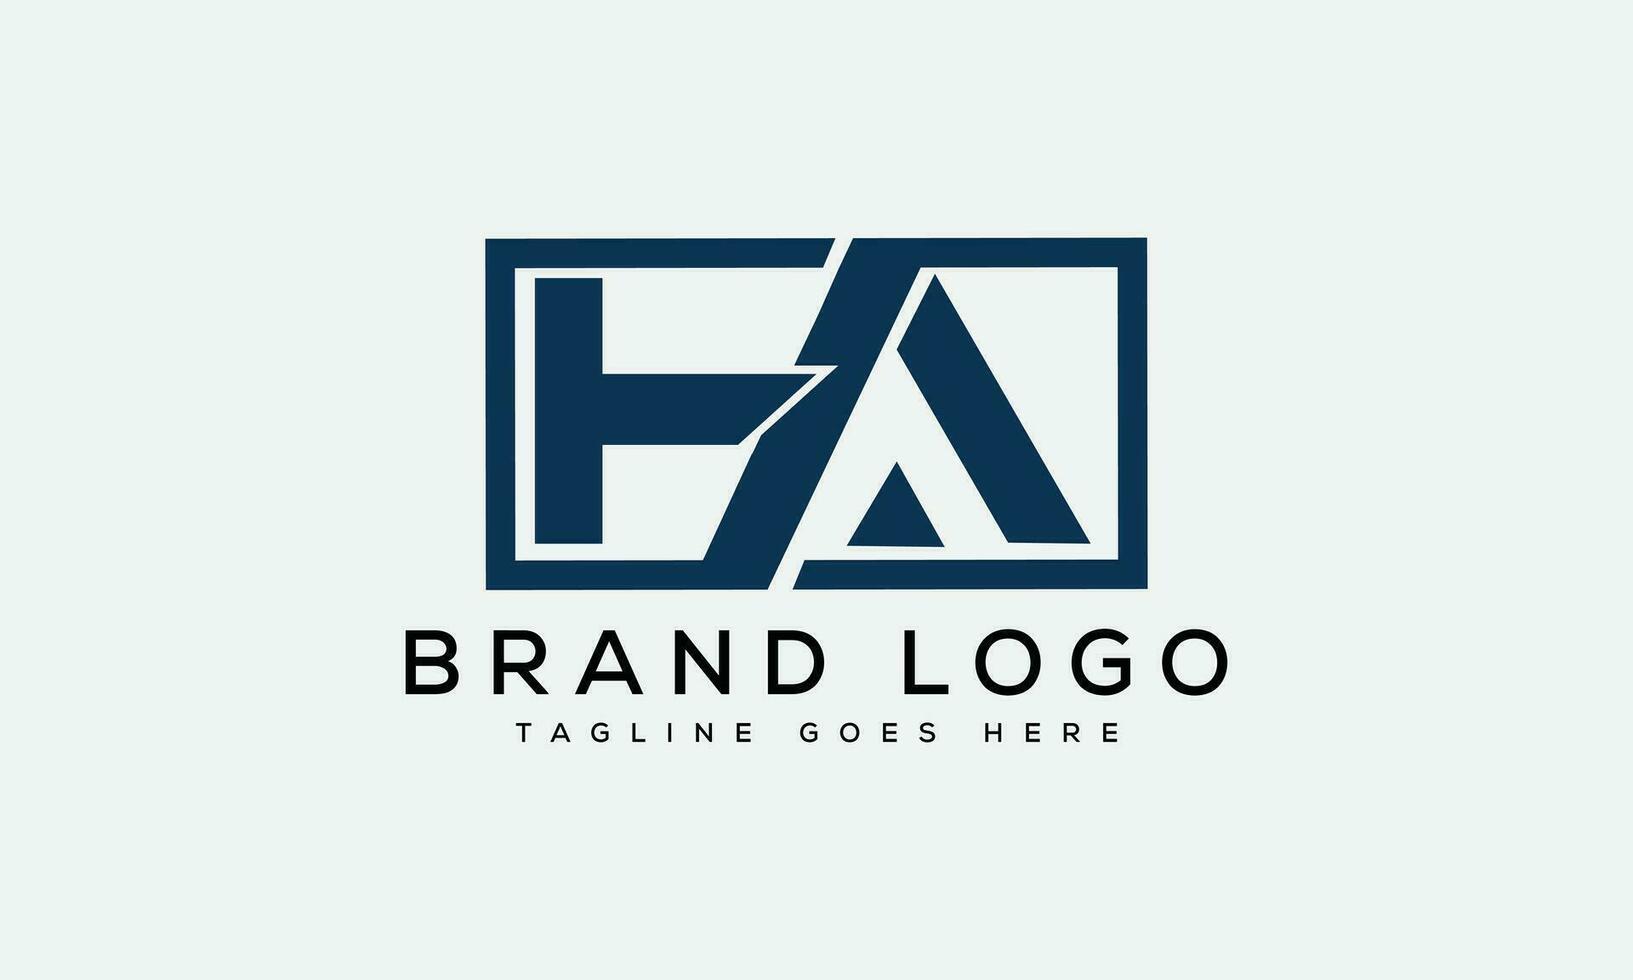 letra decir ah logo diseño vector modelo diseño para marca.